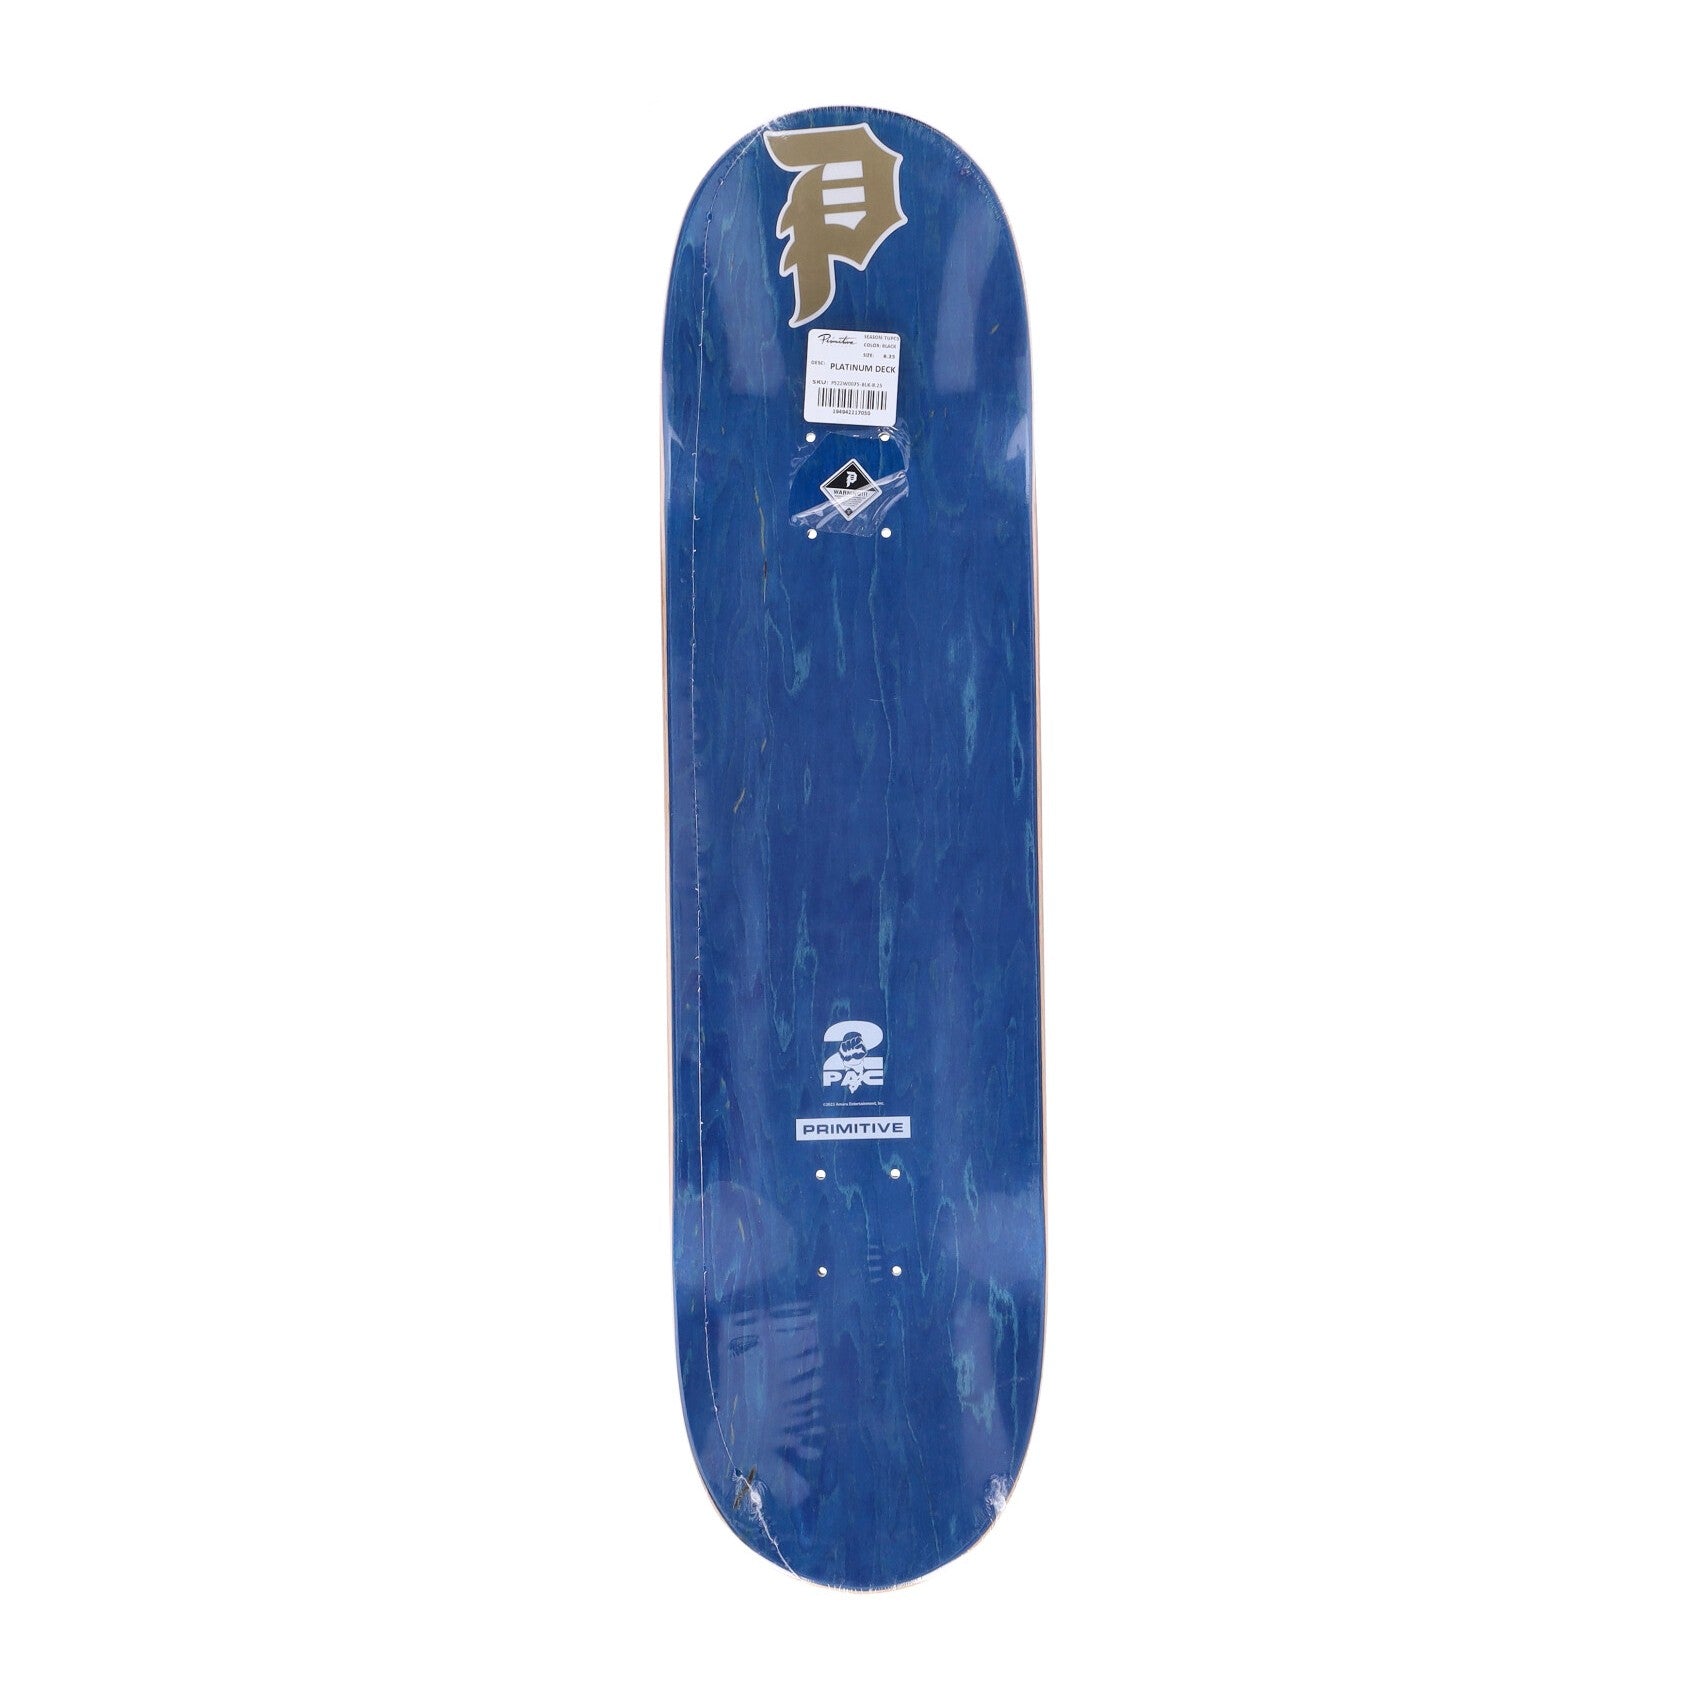 Primitive, Skateboard Tavola Uomo Platinum Deck X 2pac, Blue